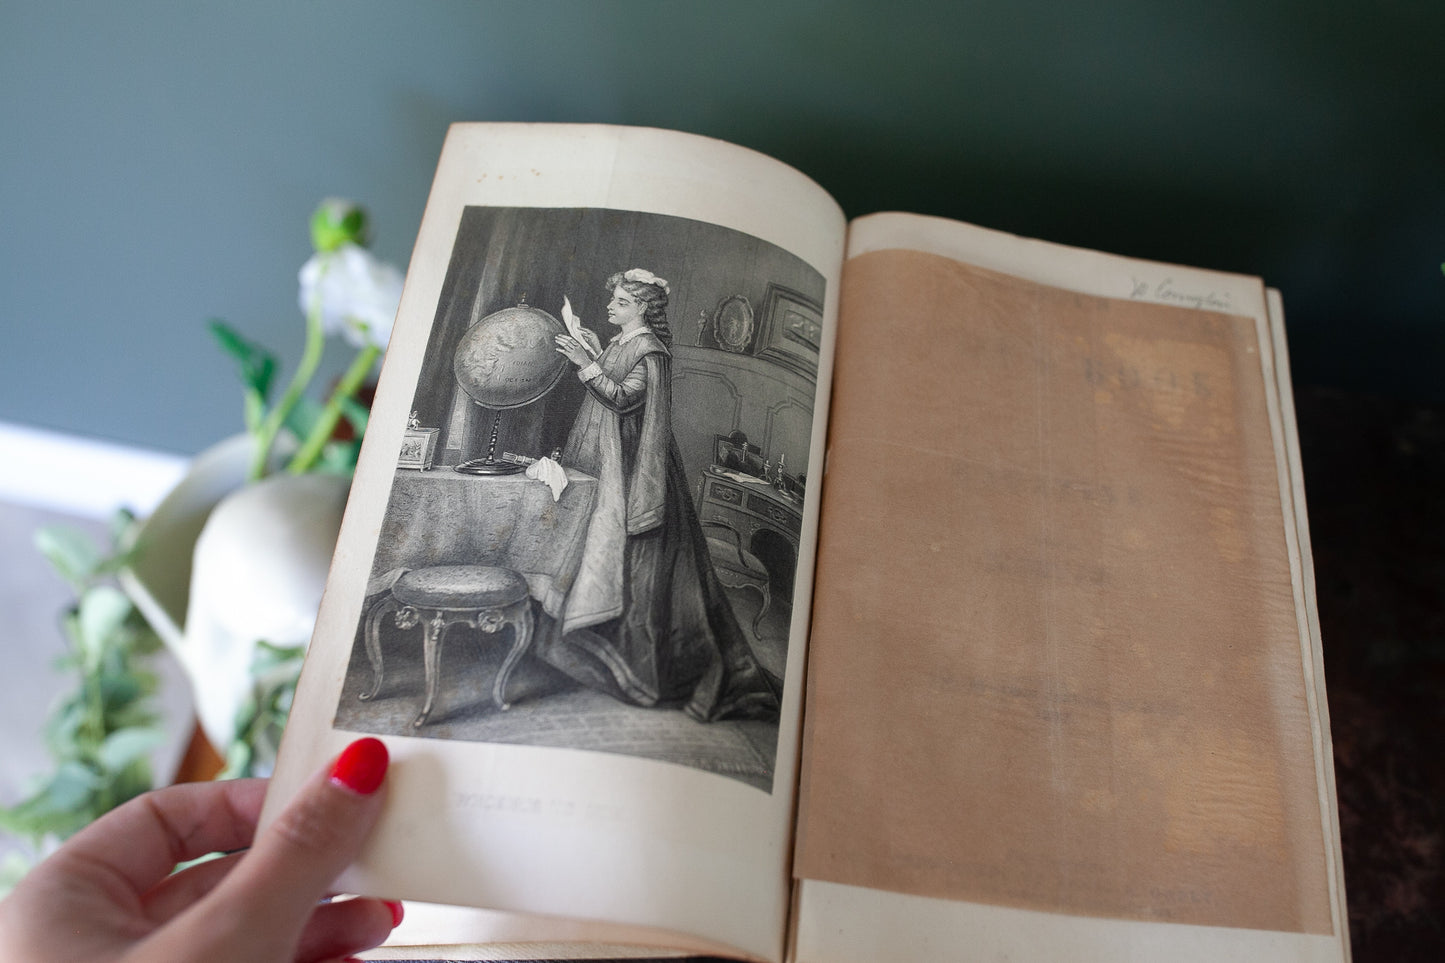 Antique Book -Godey's Lady's Book Magazine 1875- Antique  Fashion Book